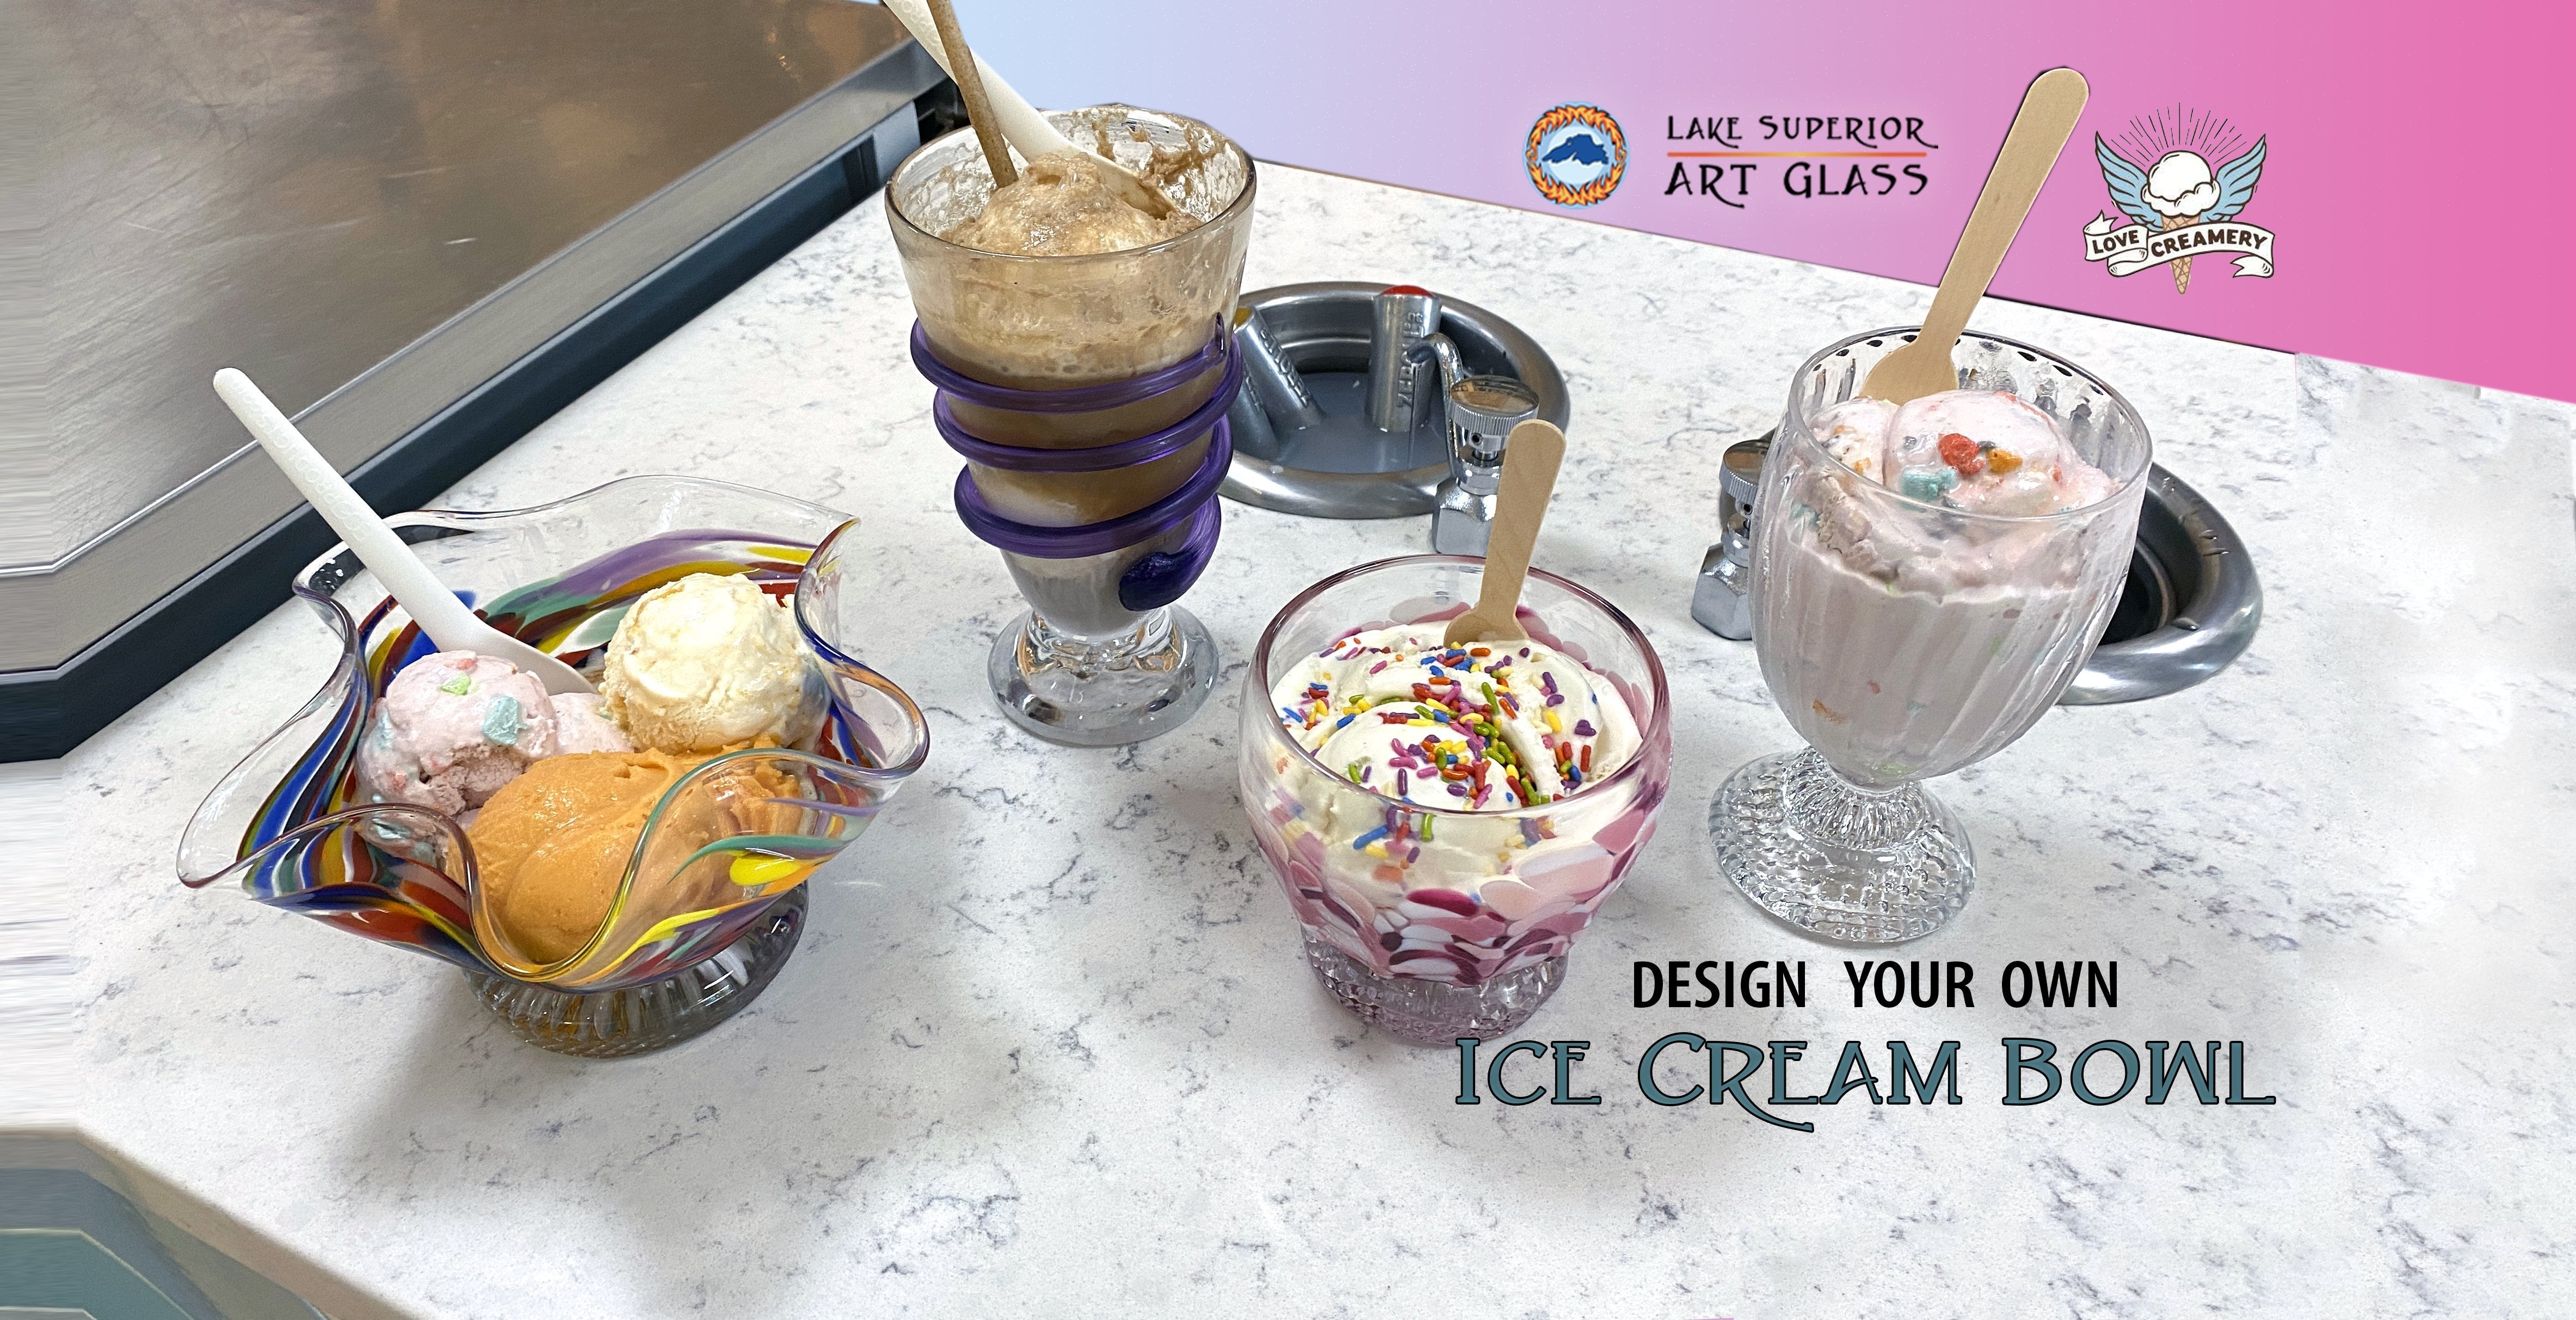 Design Your Own Ice Cream Bowl – Lake Superior Art Glass